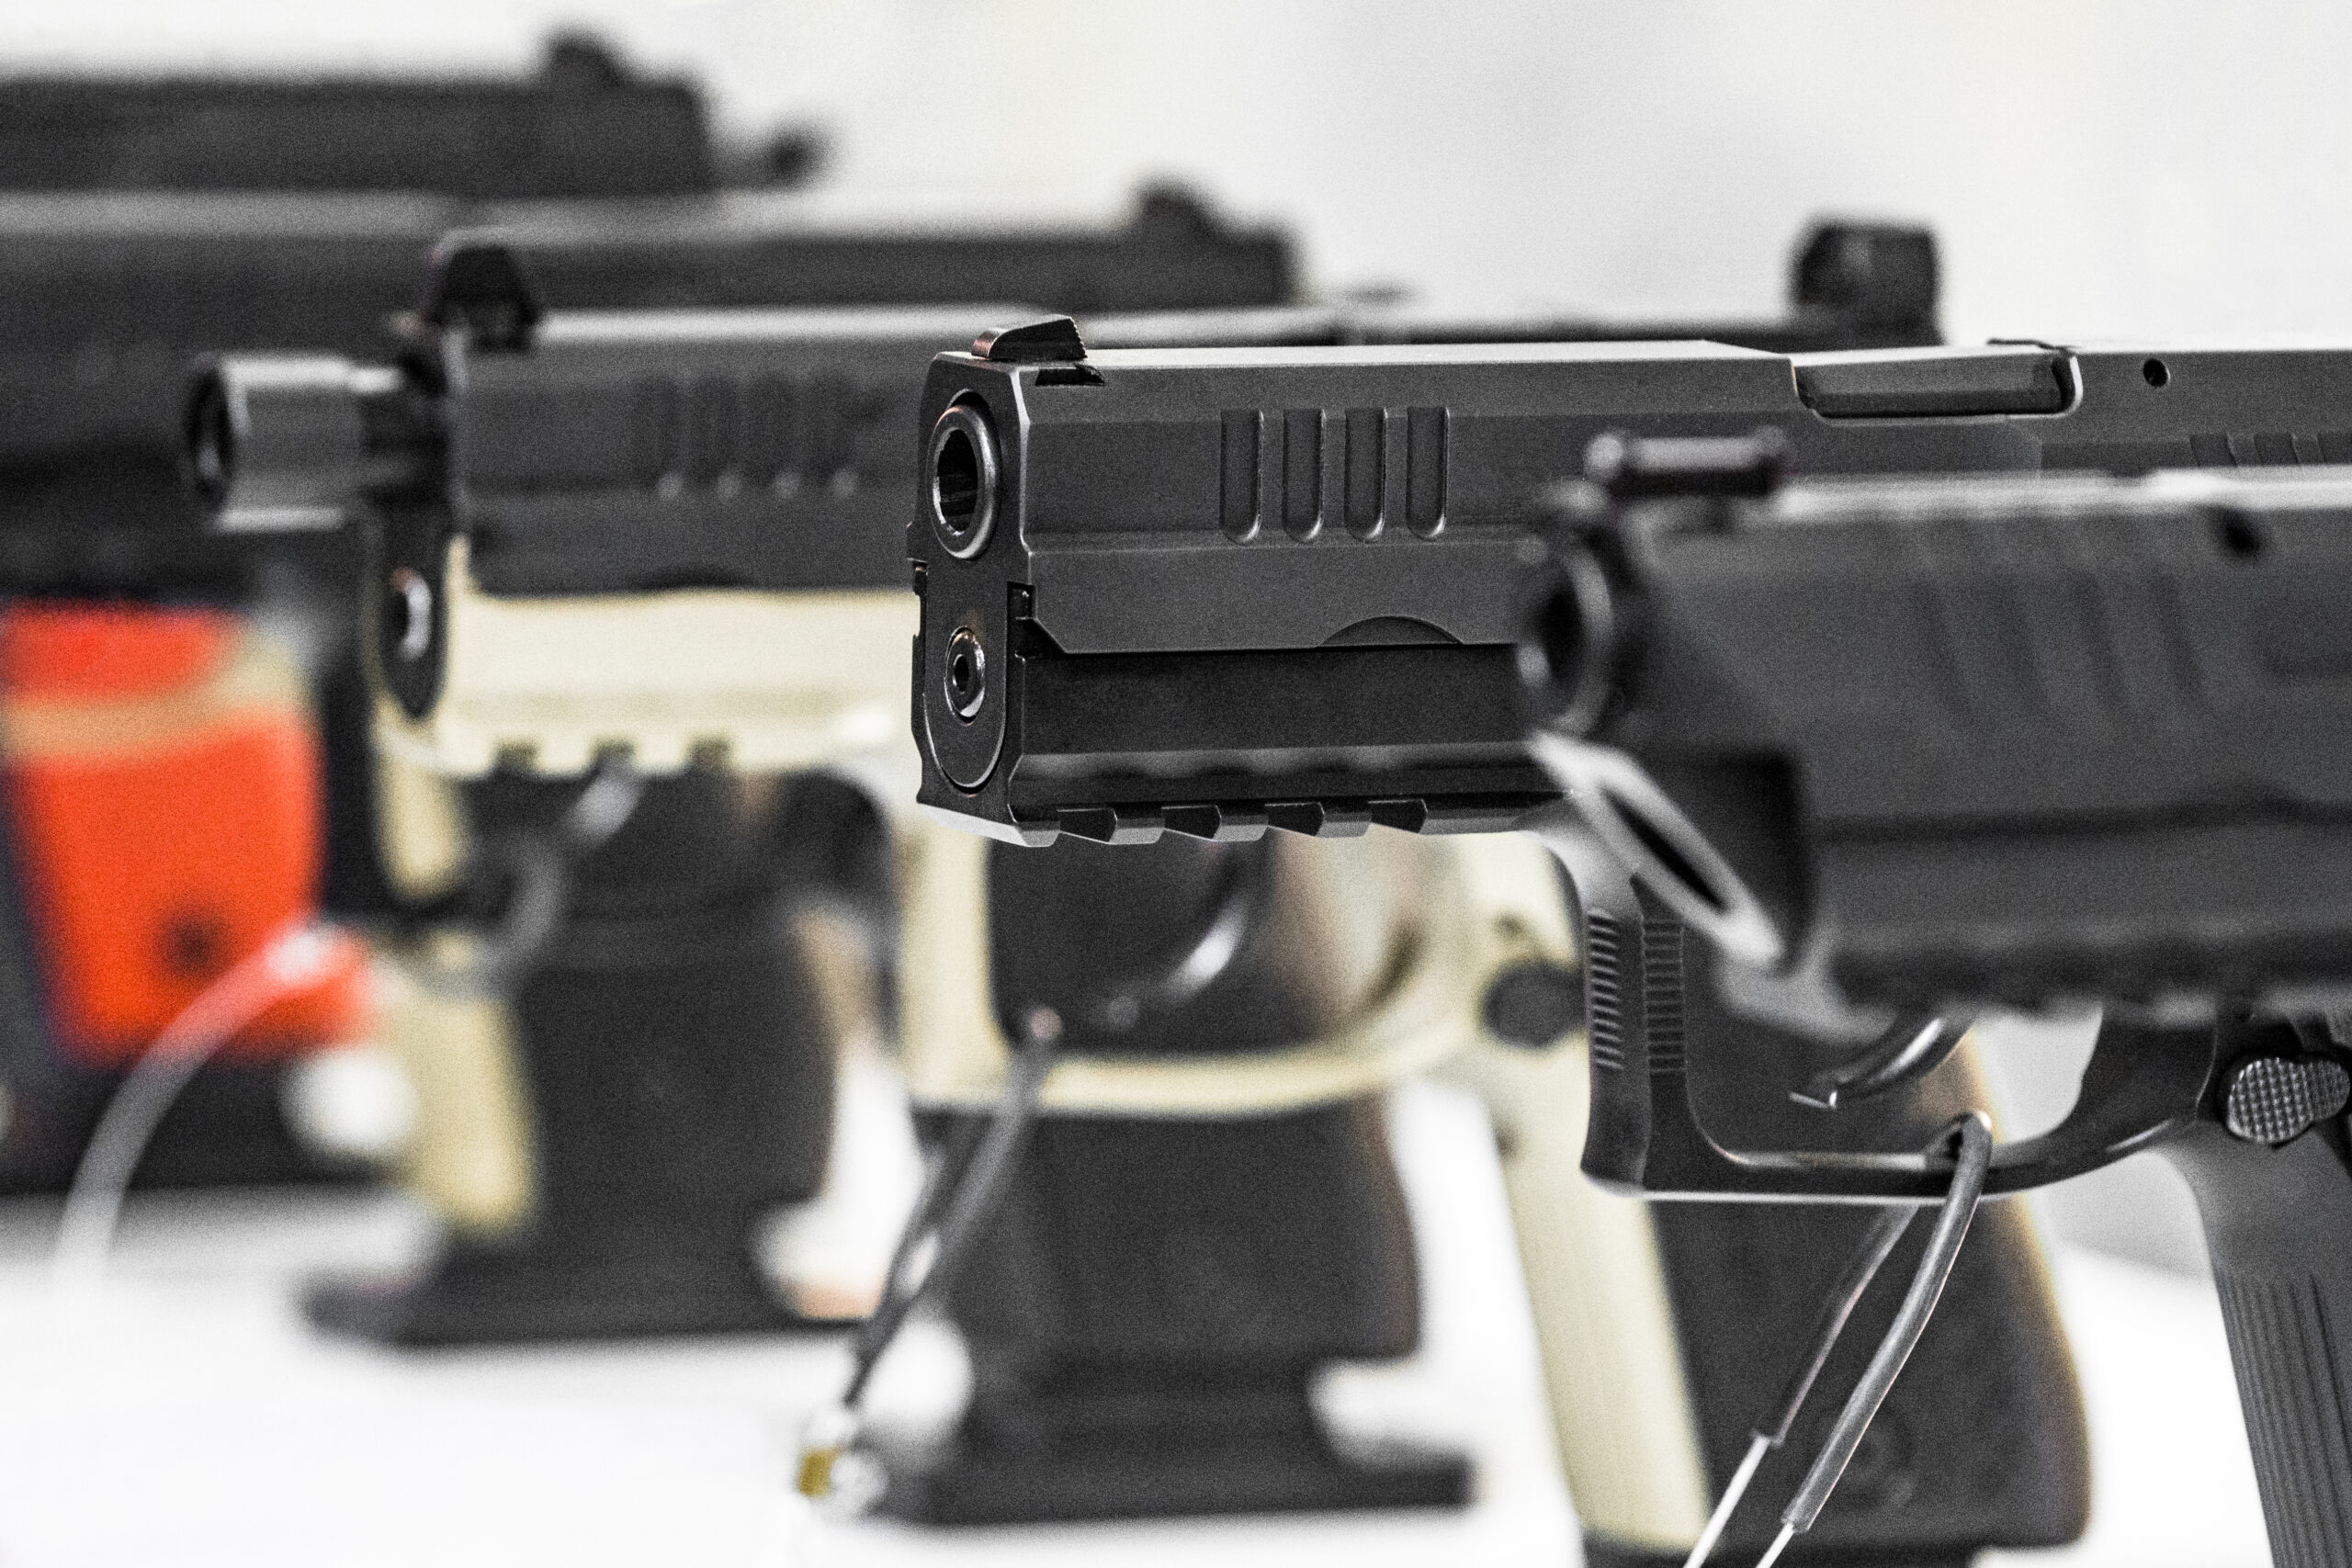 Two Gun Laws Congress Must Pass to Stop Mass Shootings